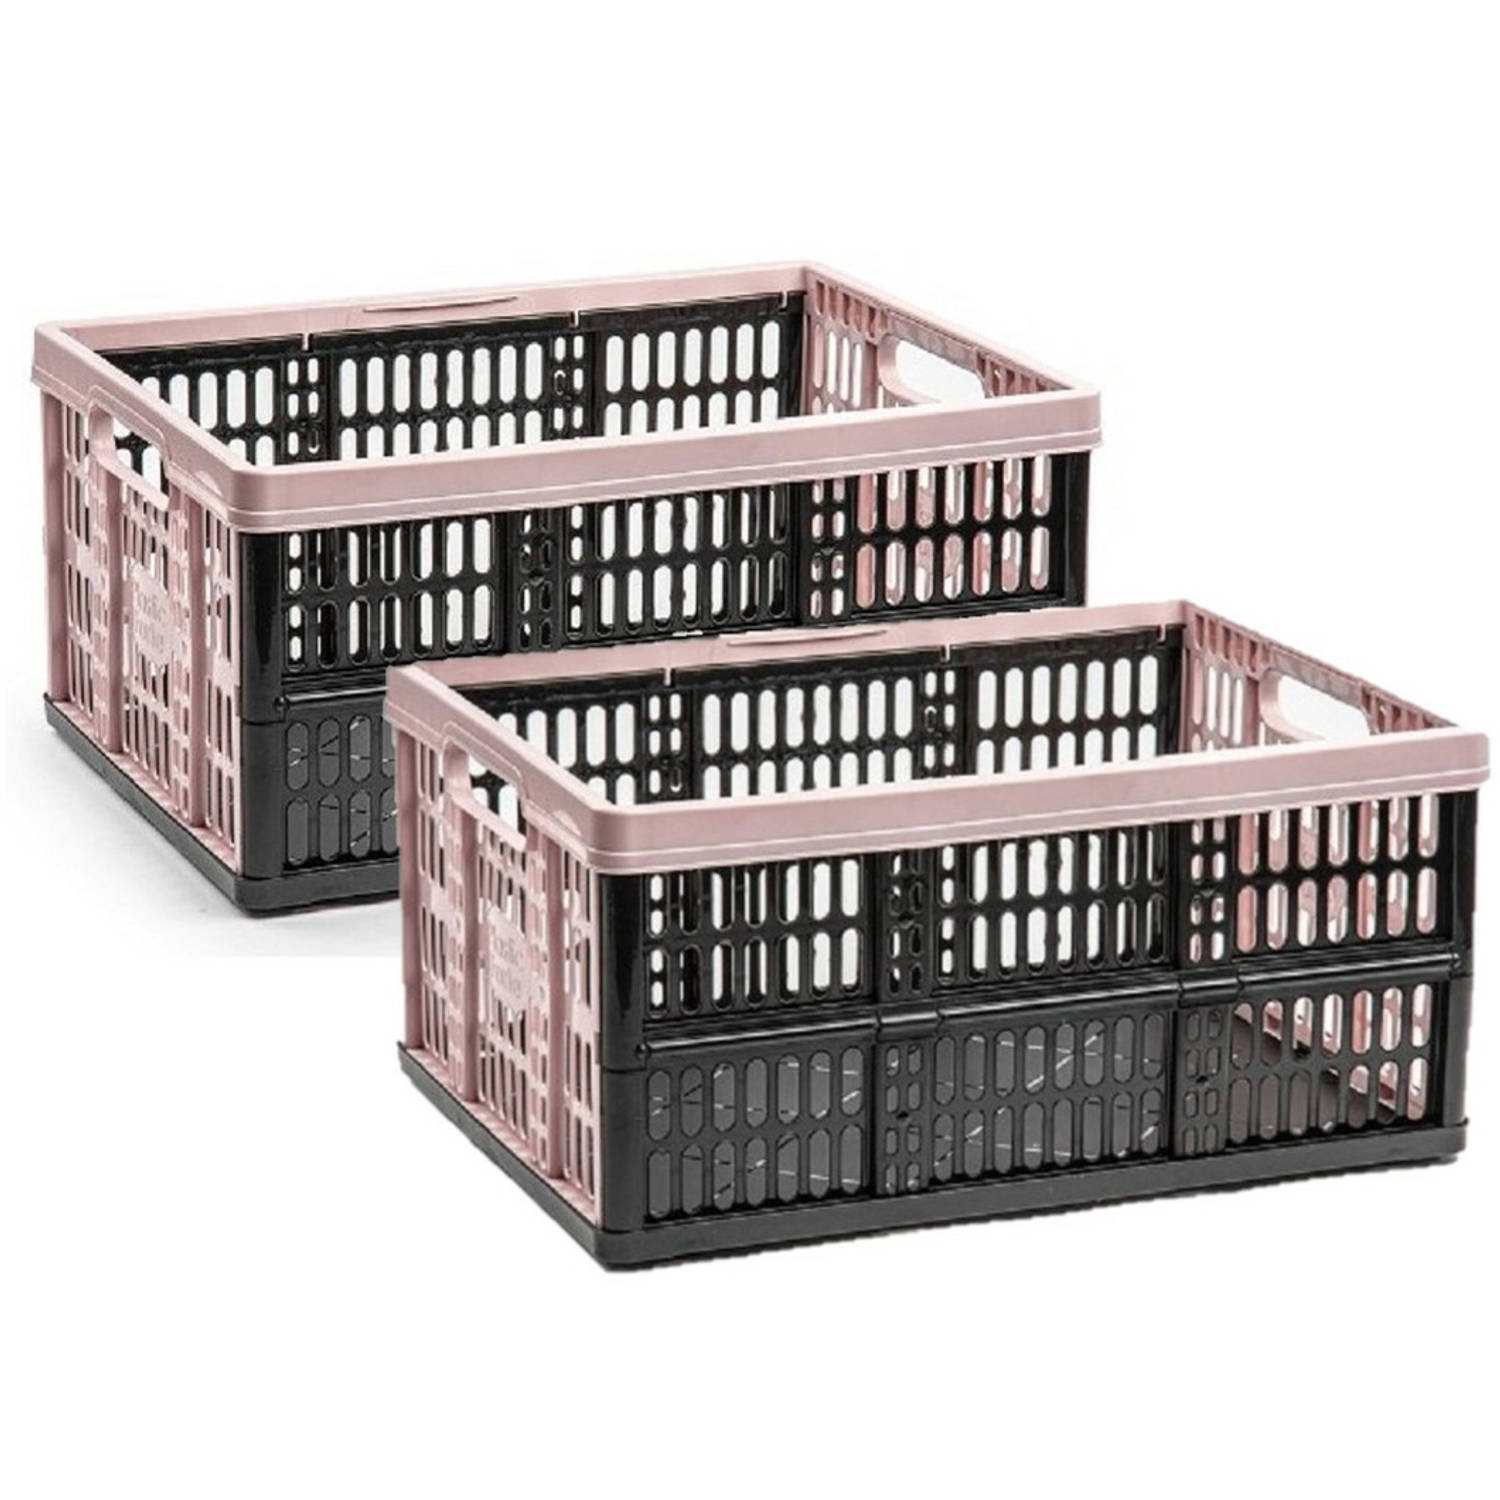 afgunst Dinkarville invoer Forte Plastics 2x stuks boodschappen kratten opvouwbaar zwart/roze 48 x 35  x 24 cm - Boodschappenkratten | Blokker